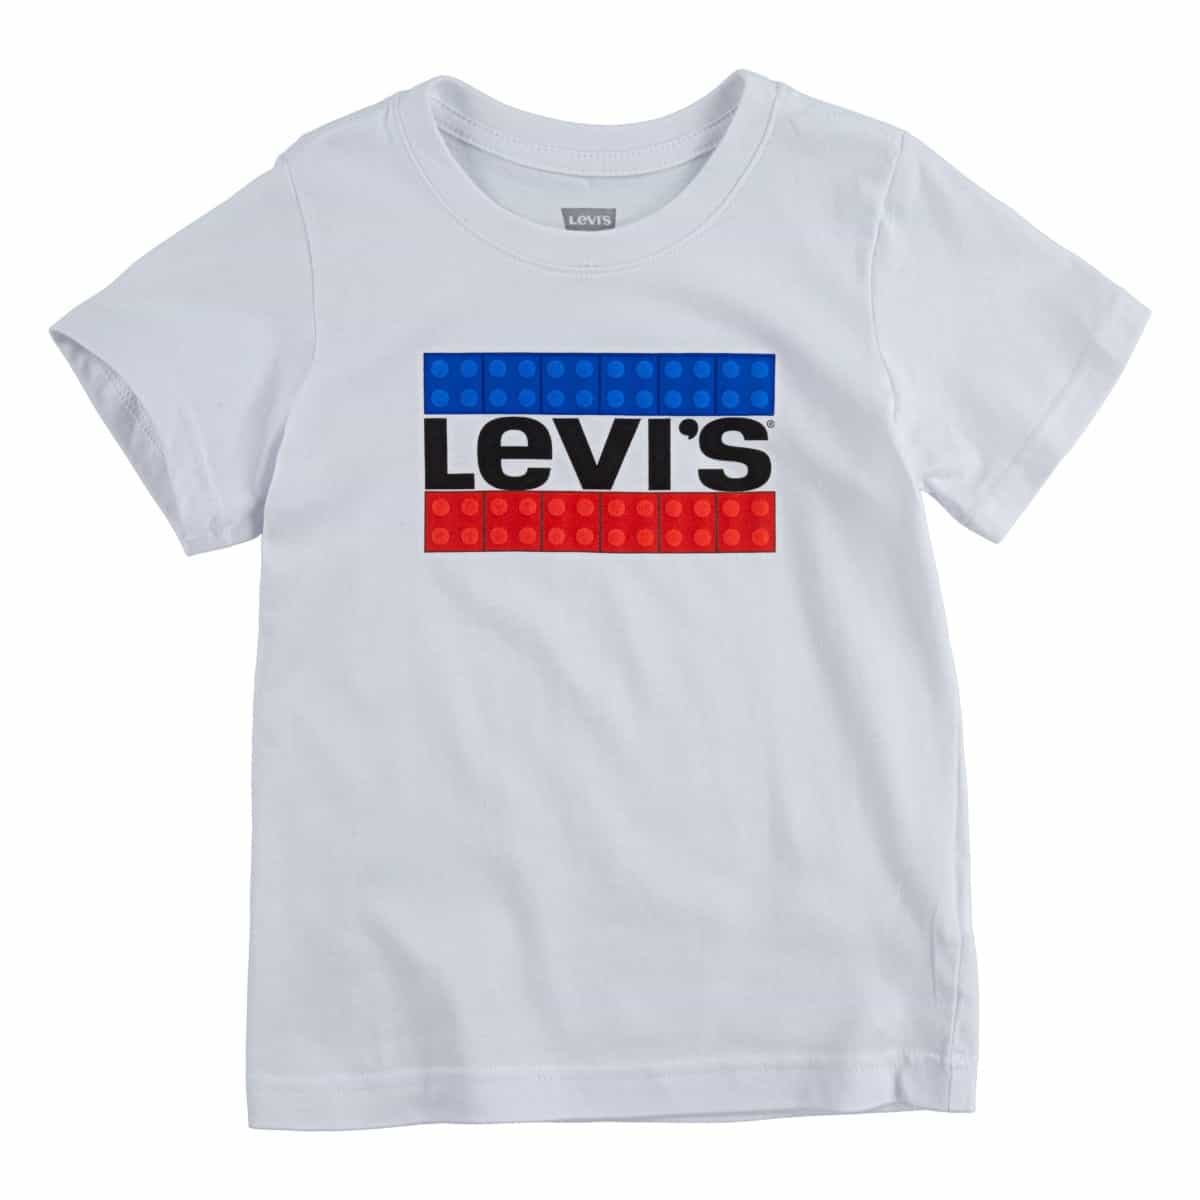 levis x lego 5006387 boys 4 7 logo t shirt scaled